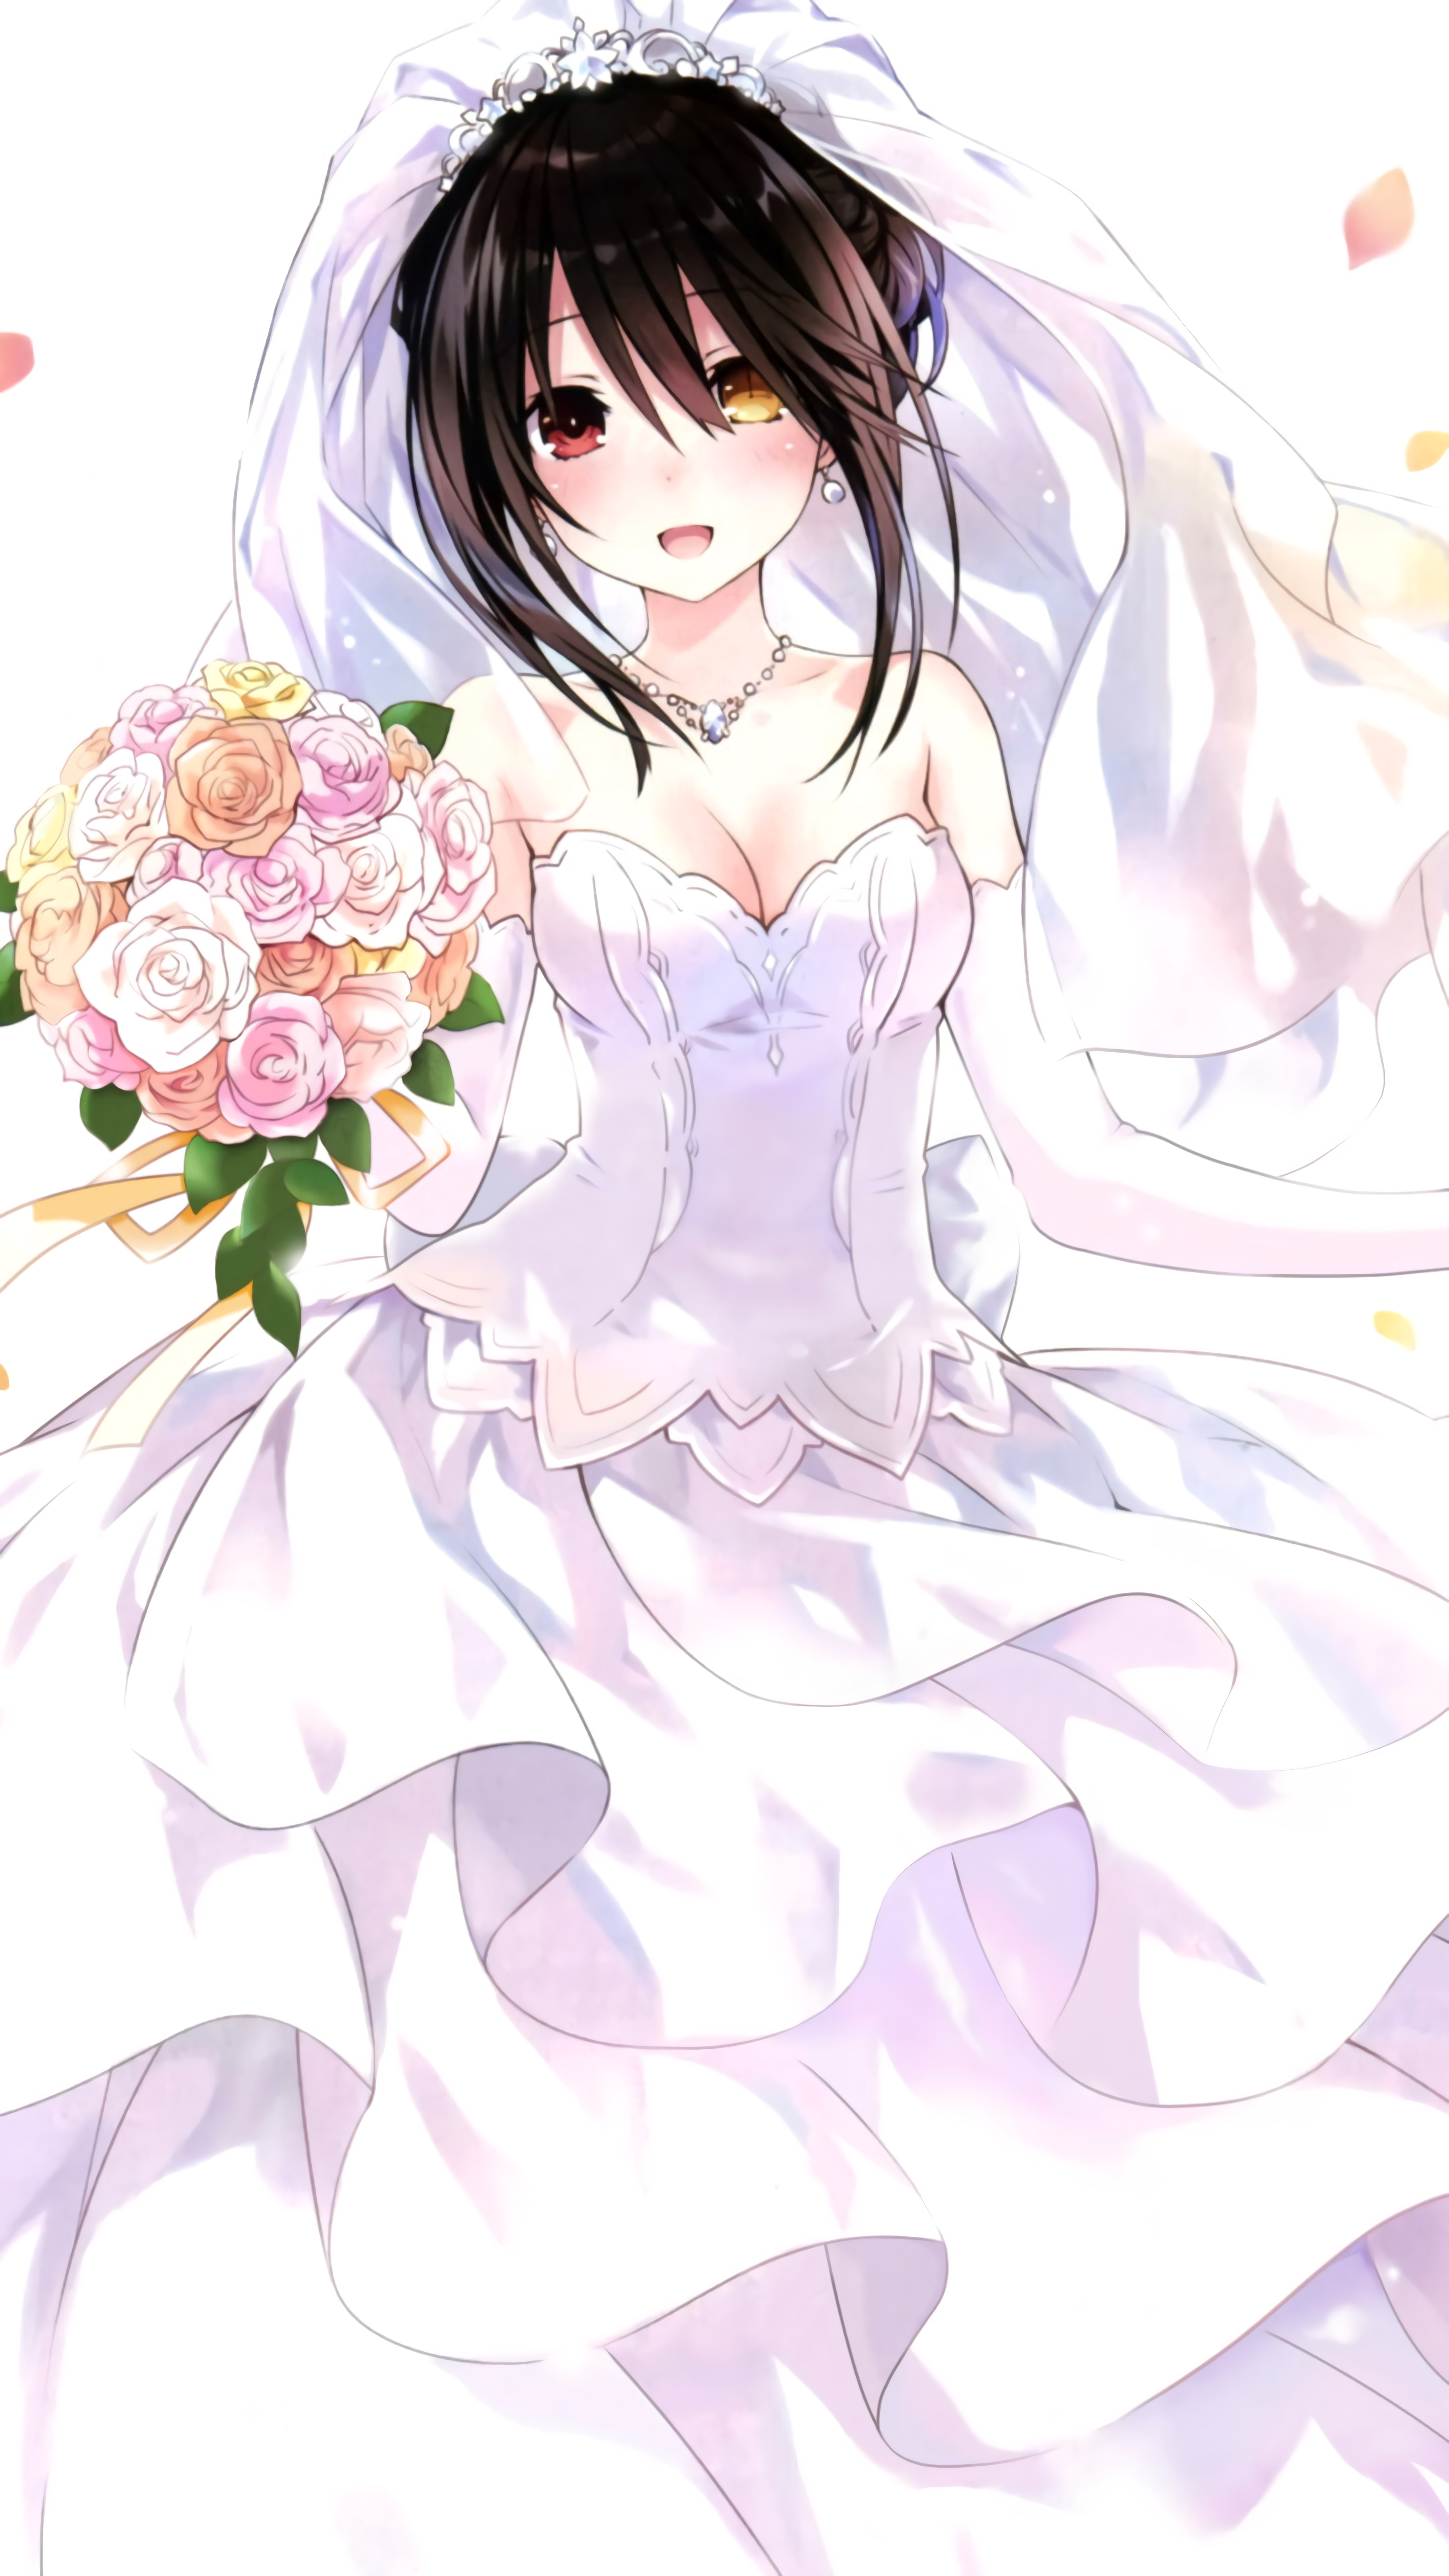 Tokisaki Kurumi Date A Live Anime Girls Wedding Dress Flowers White 4320x7680